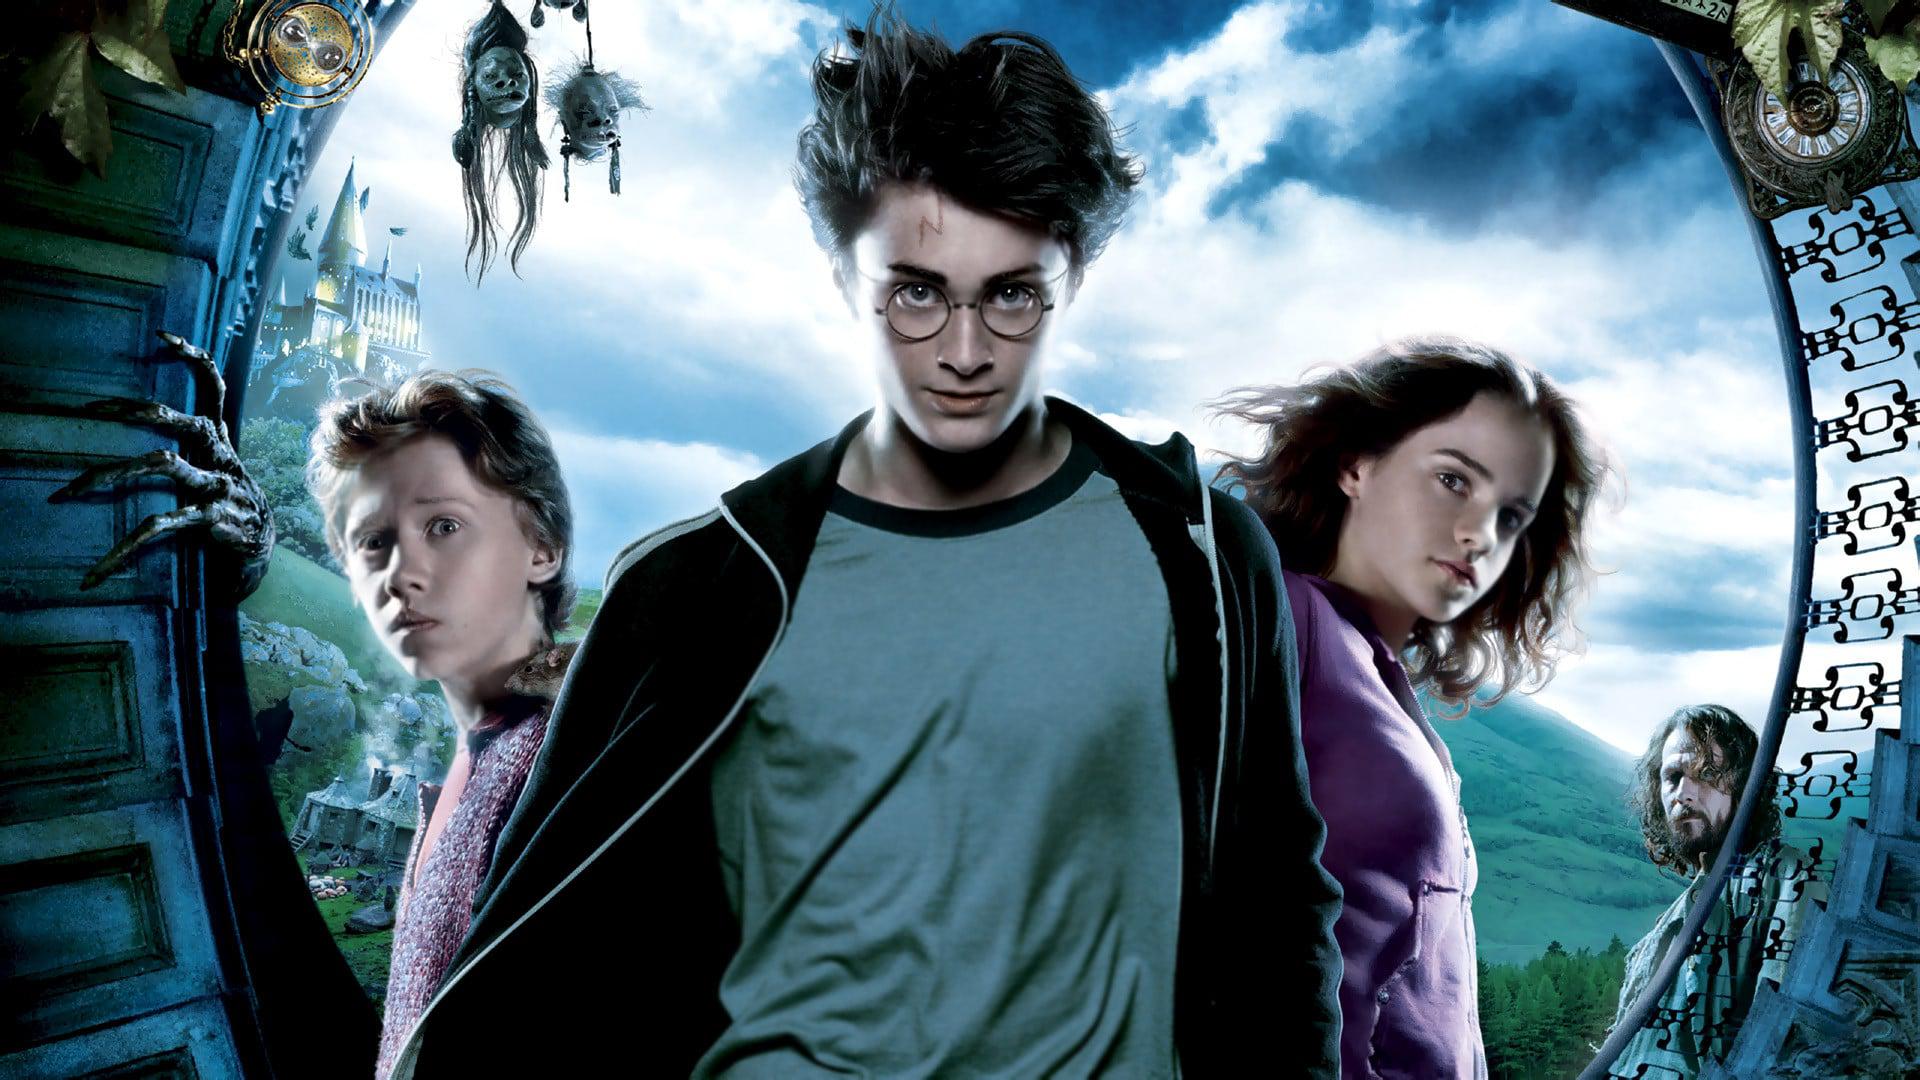 Backdrop Image for Harry Potter and the Prisoner of Azkaban